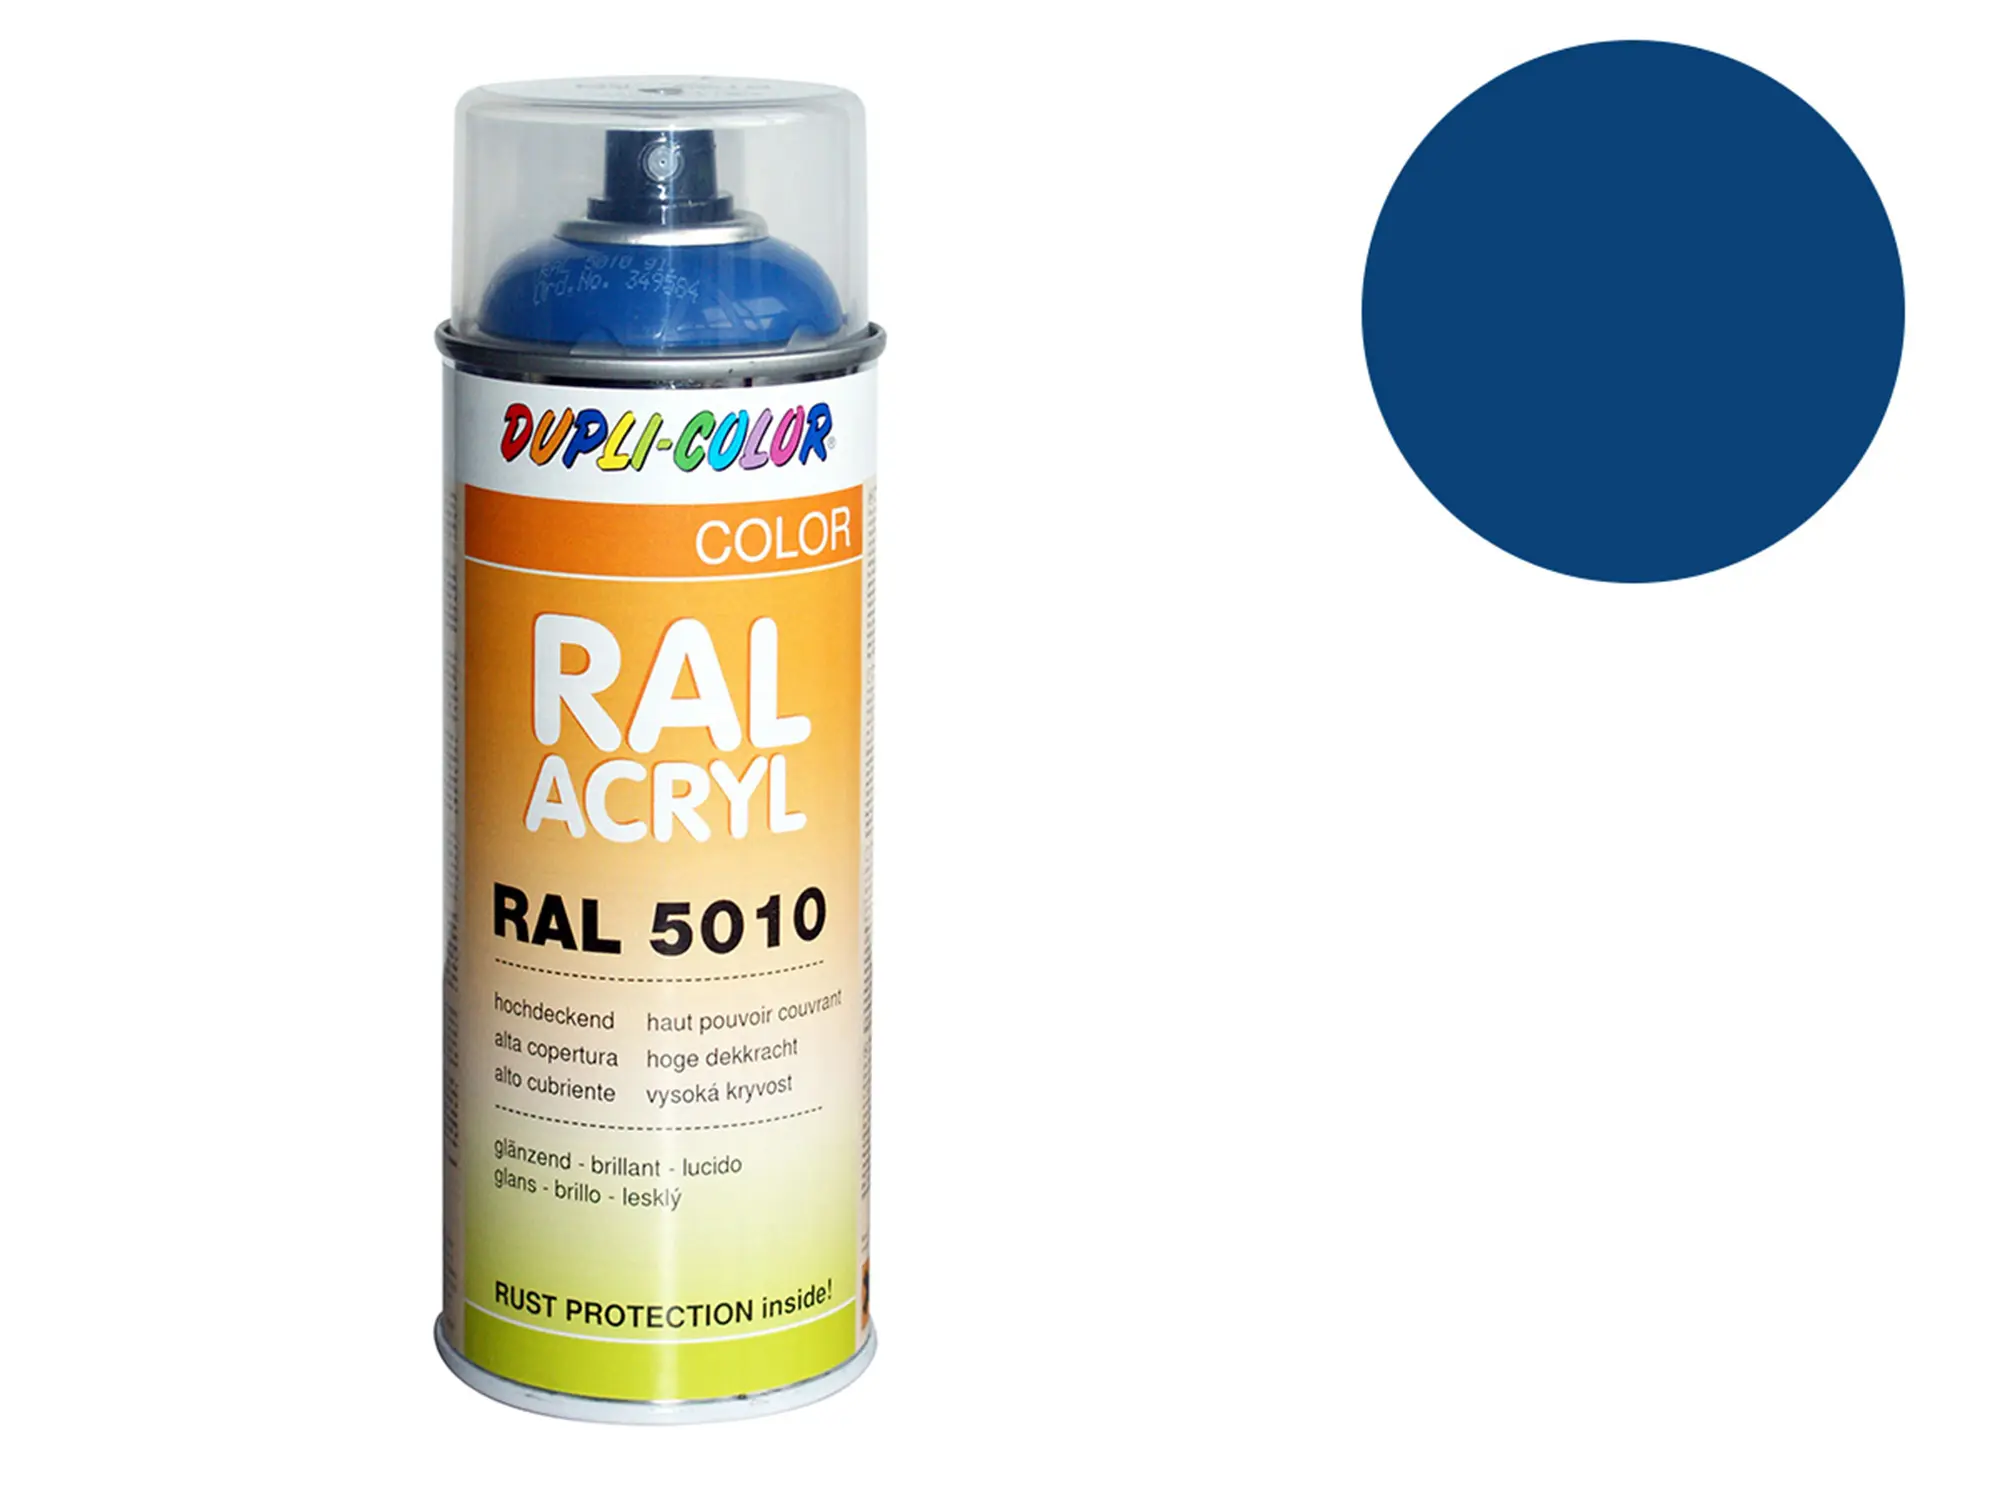 Dupli-Color Acryl-Spray RAL 5019 capriblau, glänzend - 400 ml, Art.-Nr.: 10064804 - Bild 1